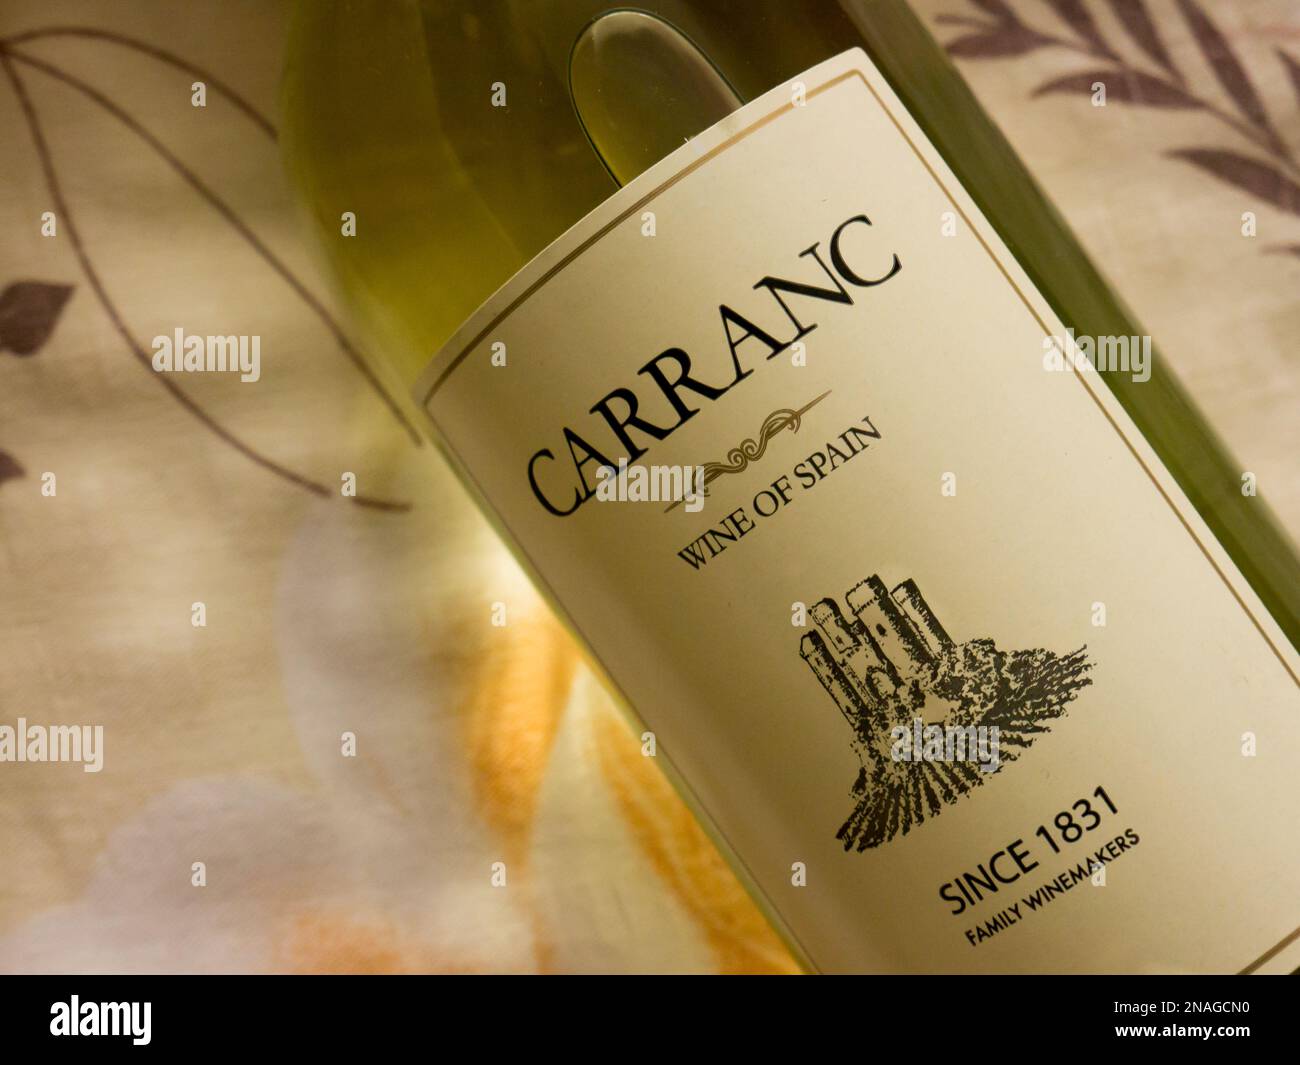 Dry white wine CARRANC Vino Blanco Seco. 2020. Stock Photo